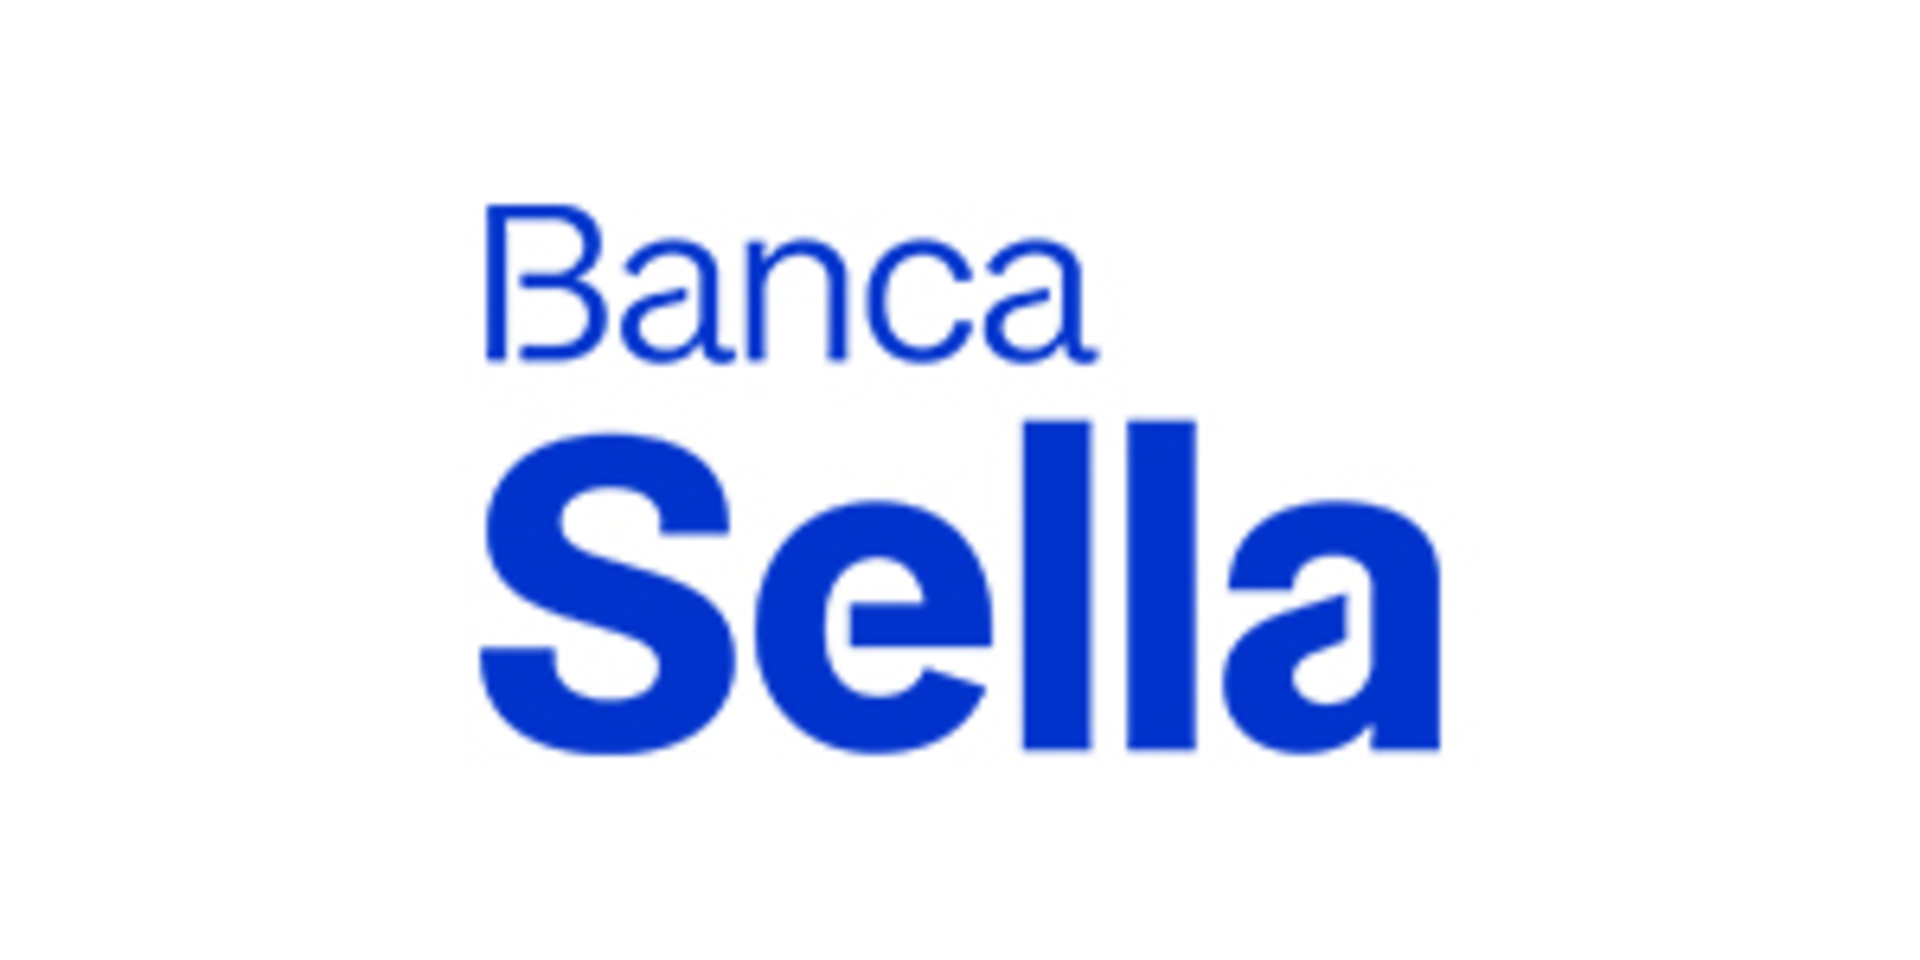 Bancasella - 